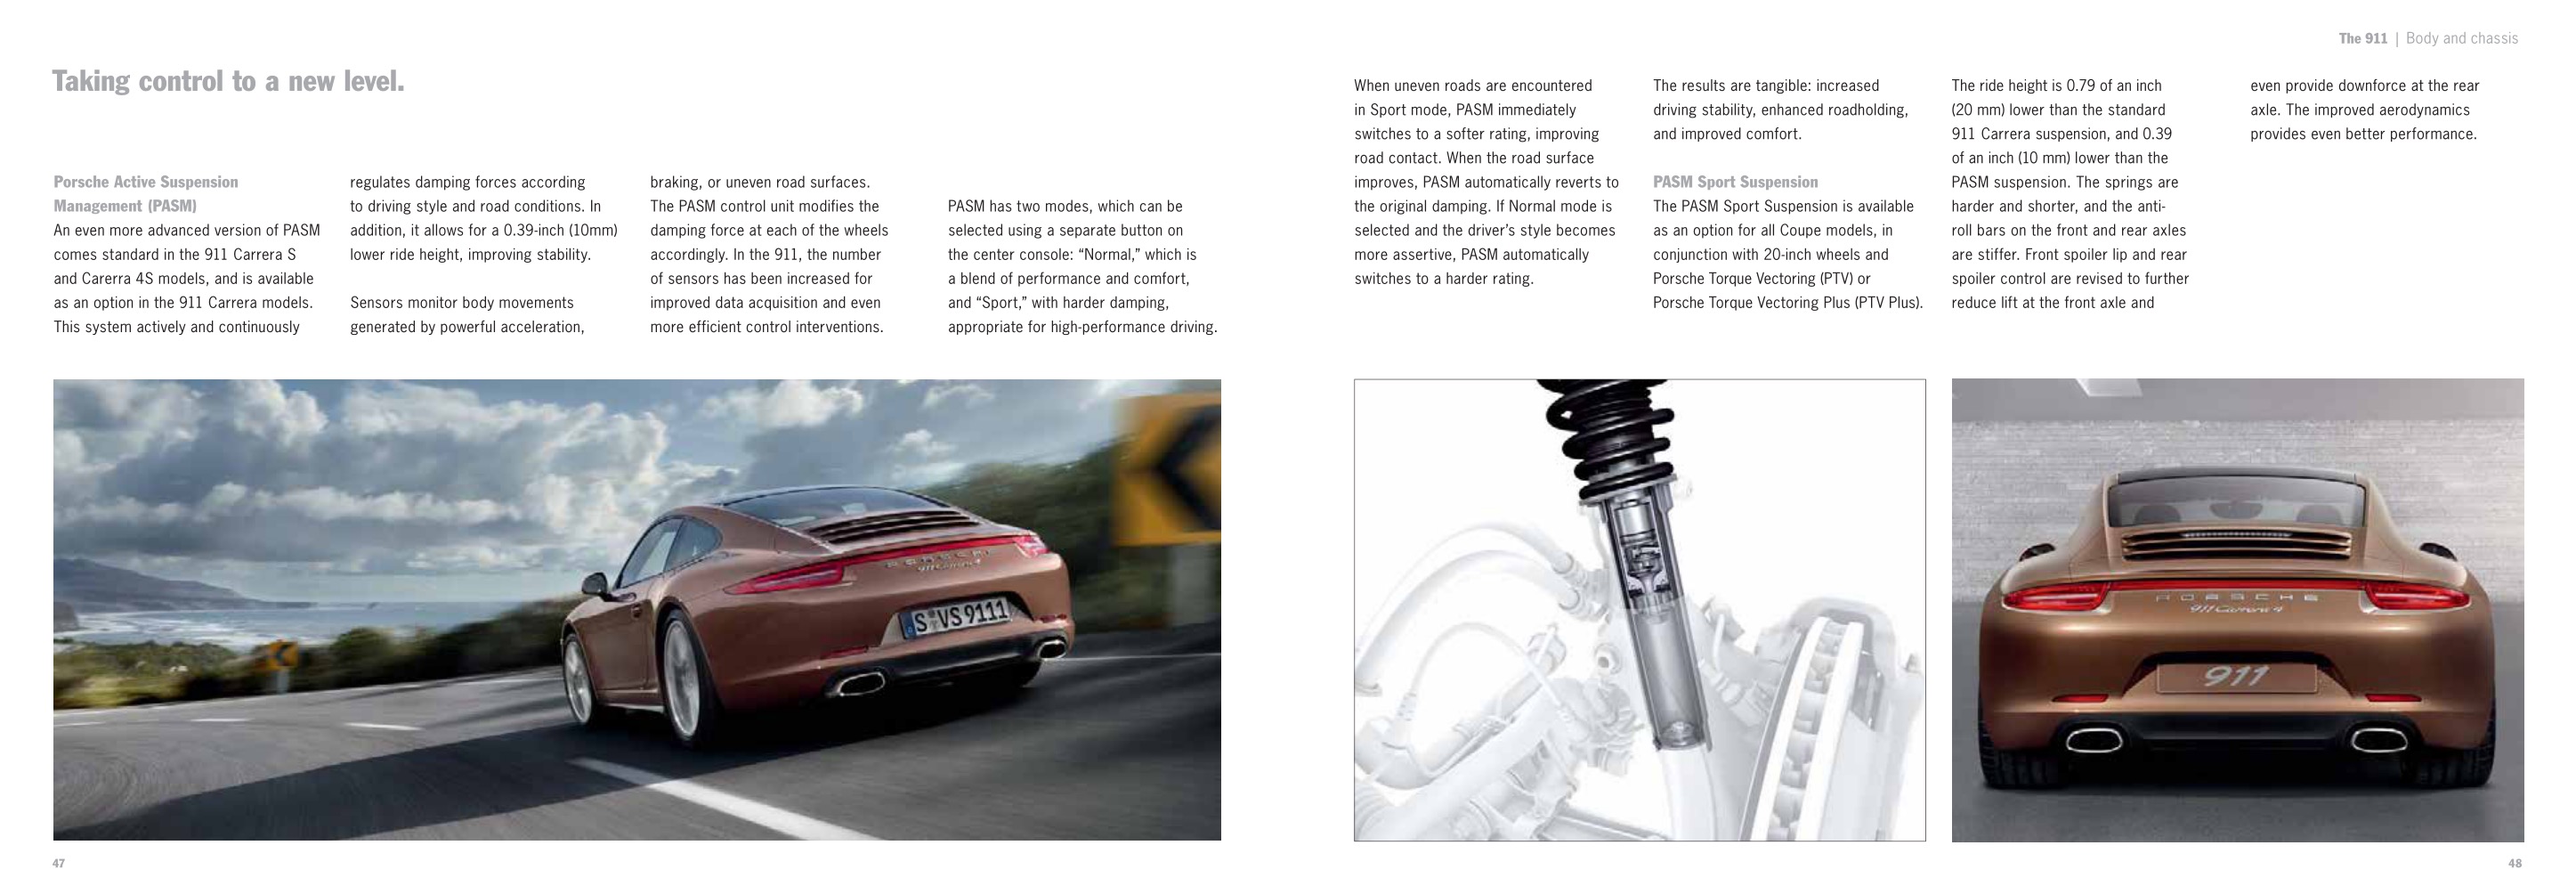 2013 Porsche 911 Brochure Page 1